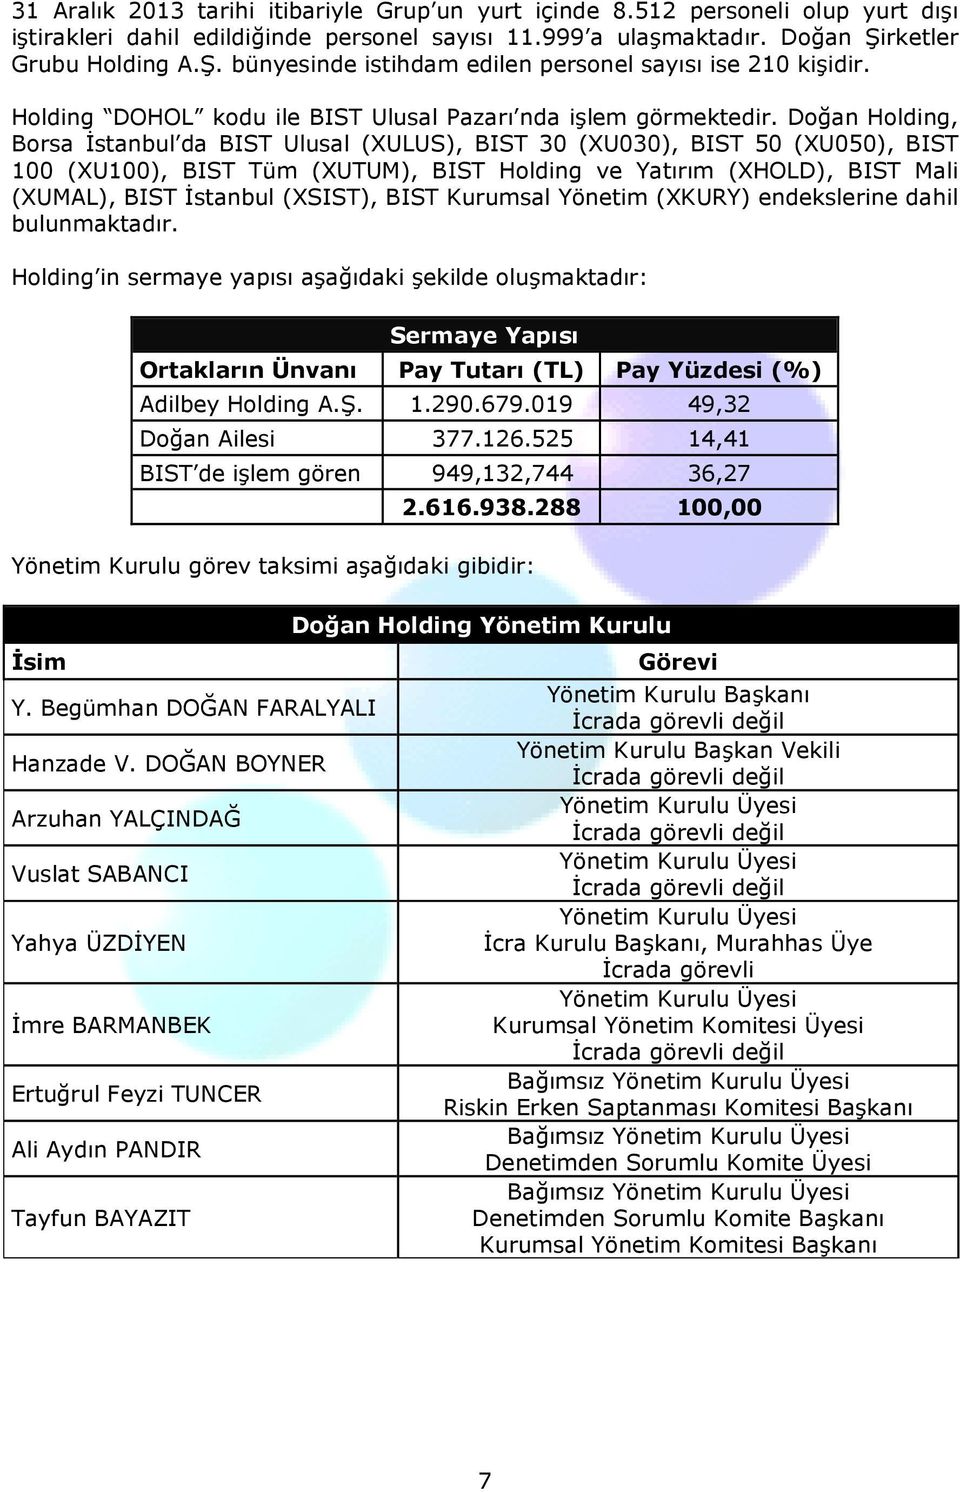 Doğan Holding, Borsa İstanbul da BIST Ulusal (XULUS), BIST 30 (XU030), BIST 50 (XU050), BIST 100 (XU100), BIST Tüm (XUTUM), BIST Holding ve Yatırım (XHOLD), BIST Mali (XUMAL), BIST İstanbul (XSIST),